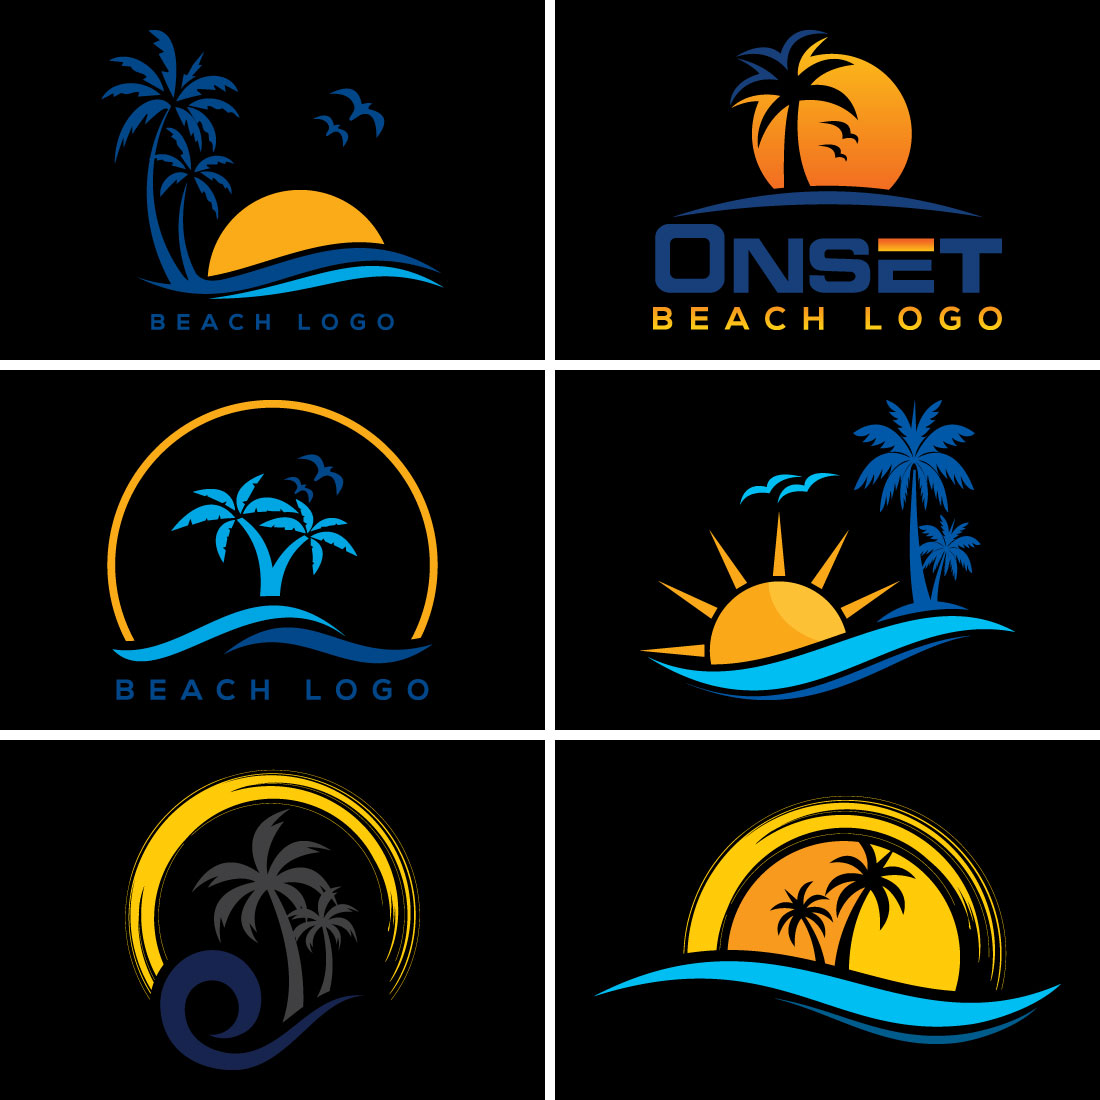 Simple Modern Unique Tropical Beach Logo Vector Illustration cover image.